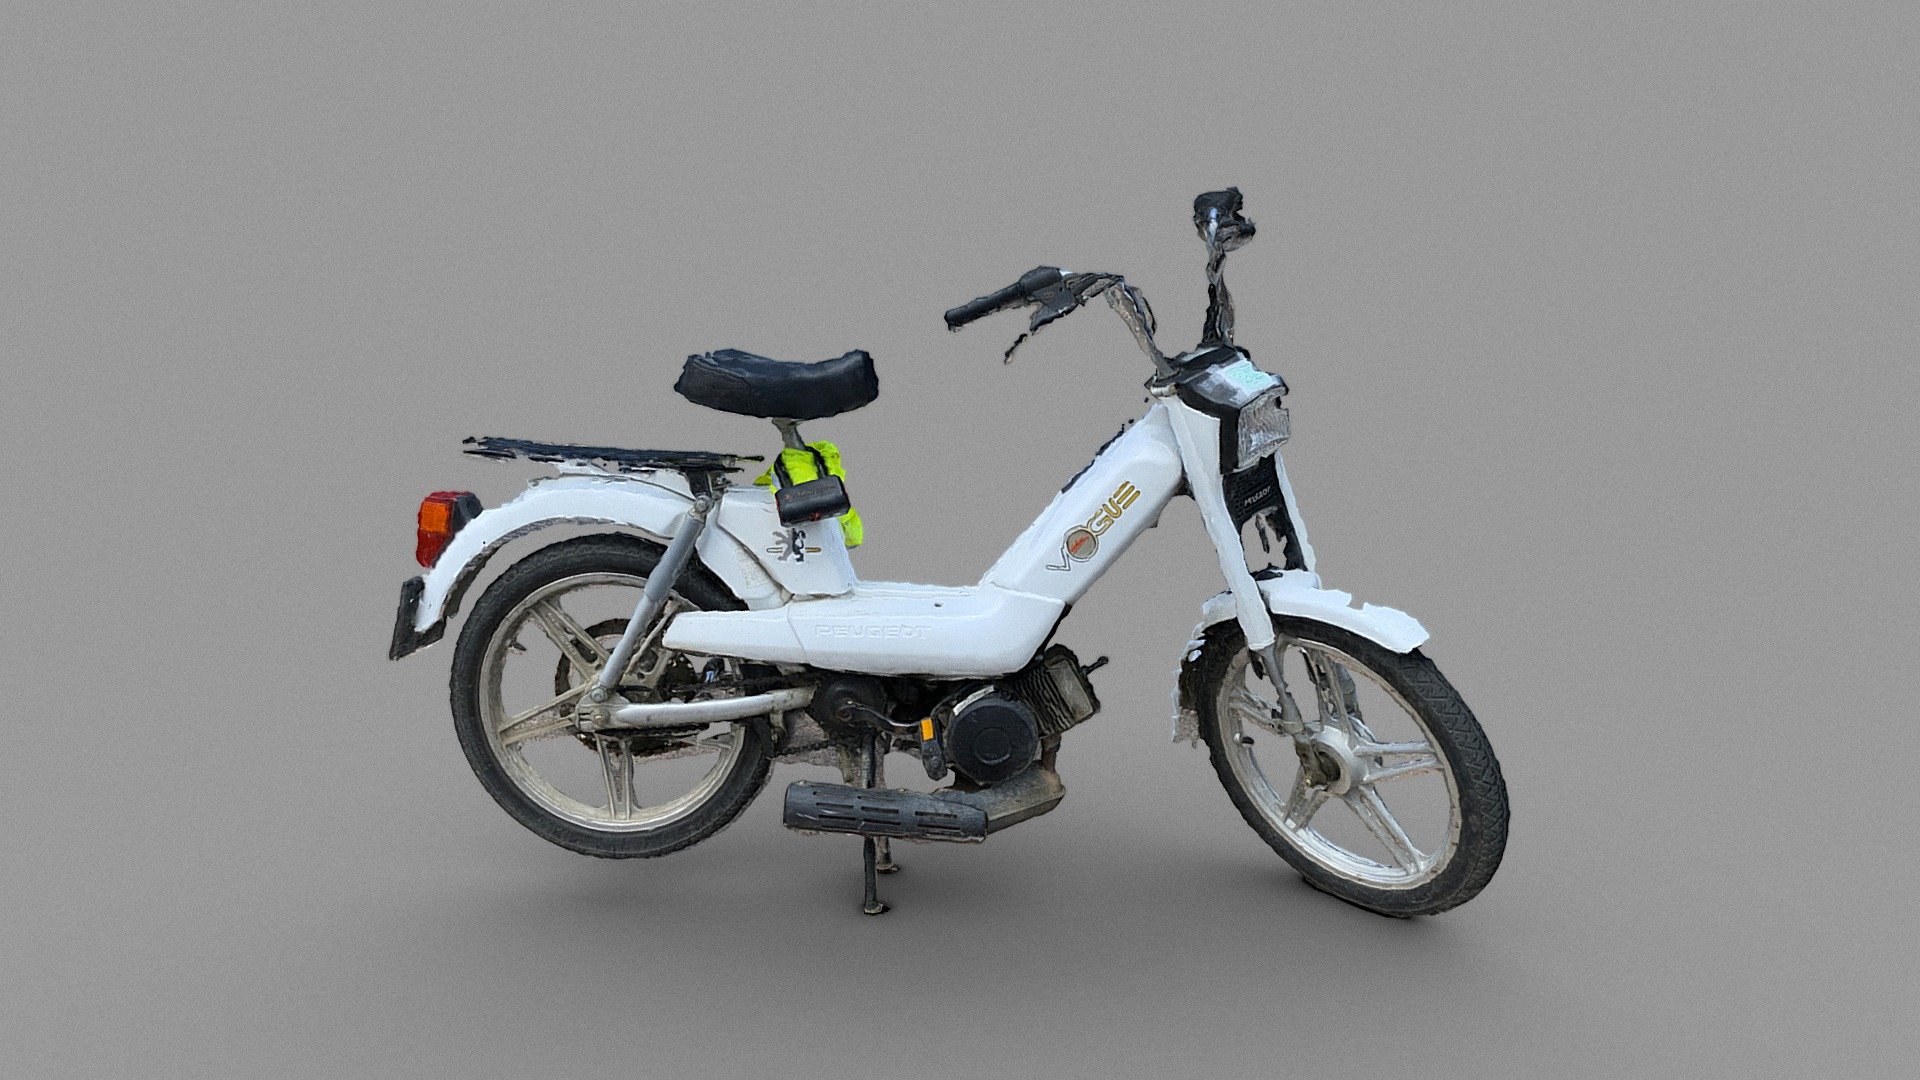 Motocycle PEUGEOT 103 VTTN12V  50 CC  Electro Chaabani vente  electromenager